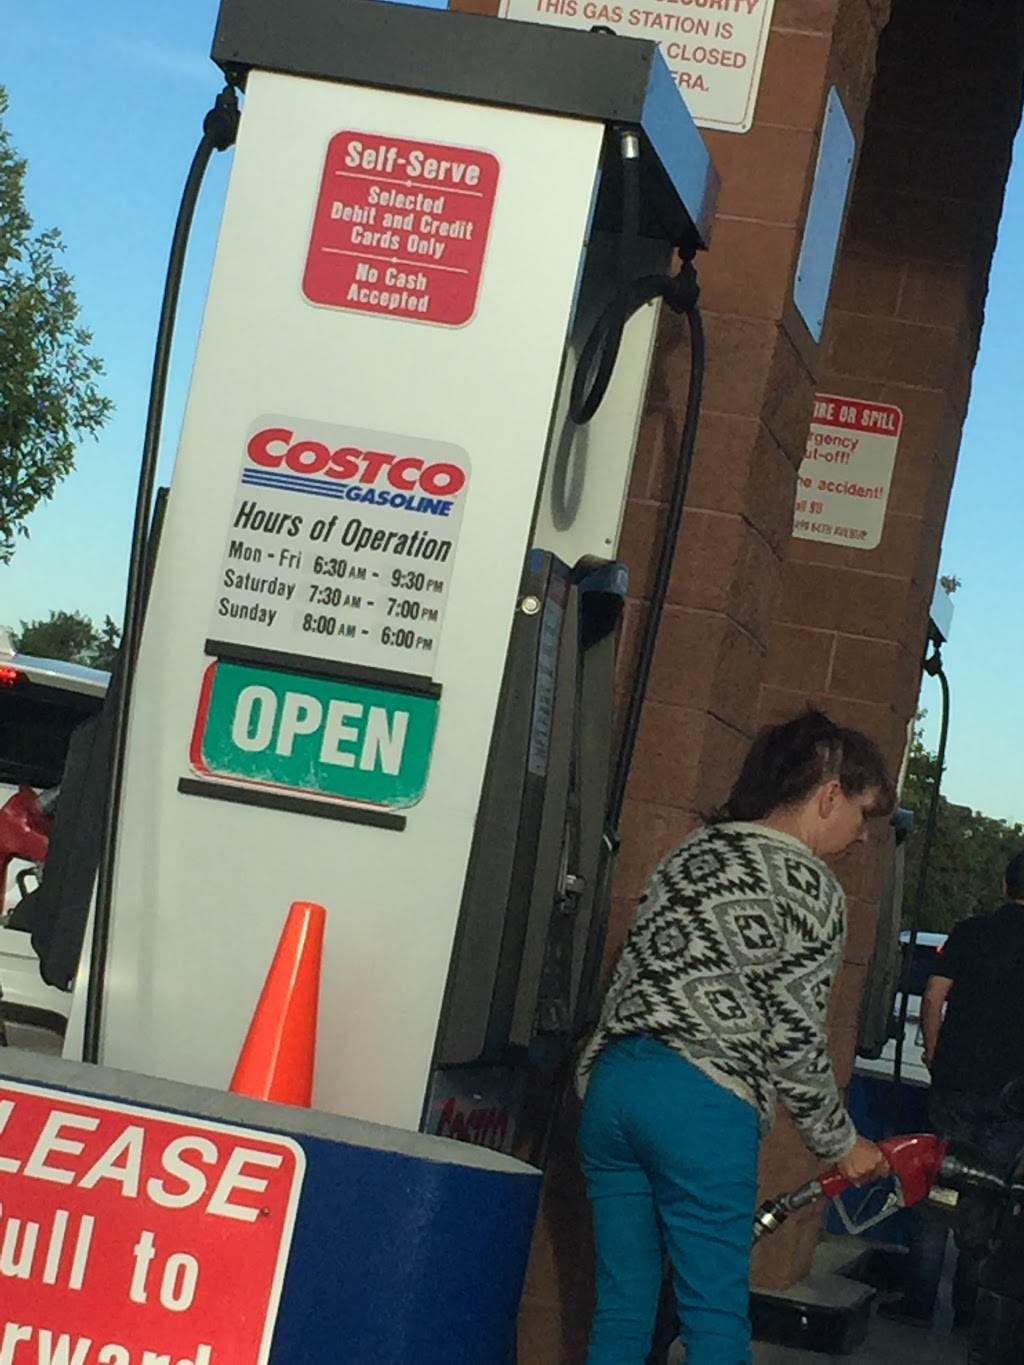 Costco Gasoline | gas station | 20499 64 Ave, Langley City, BC V2Y 1N5, Canada | 6045398901 OR +1 604-539-8901